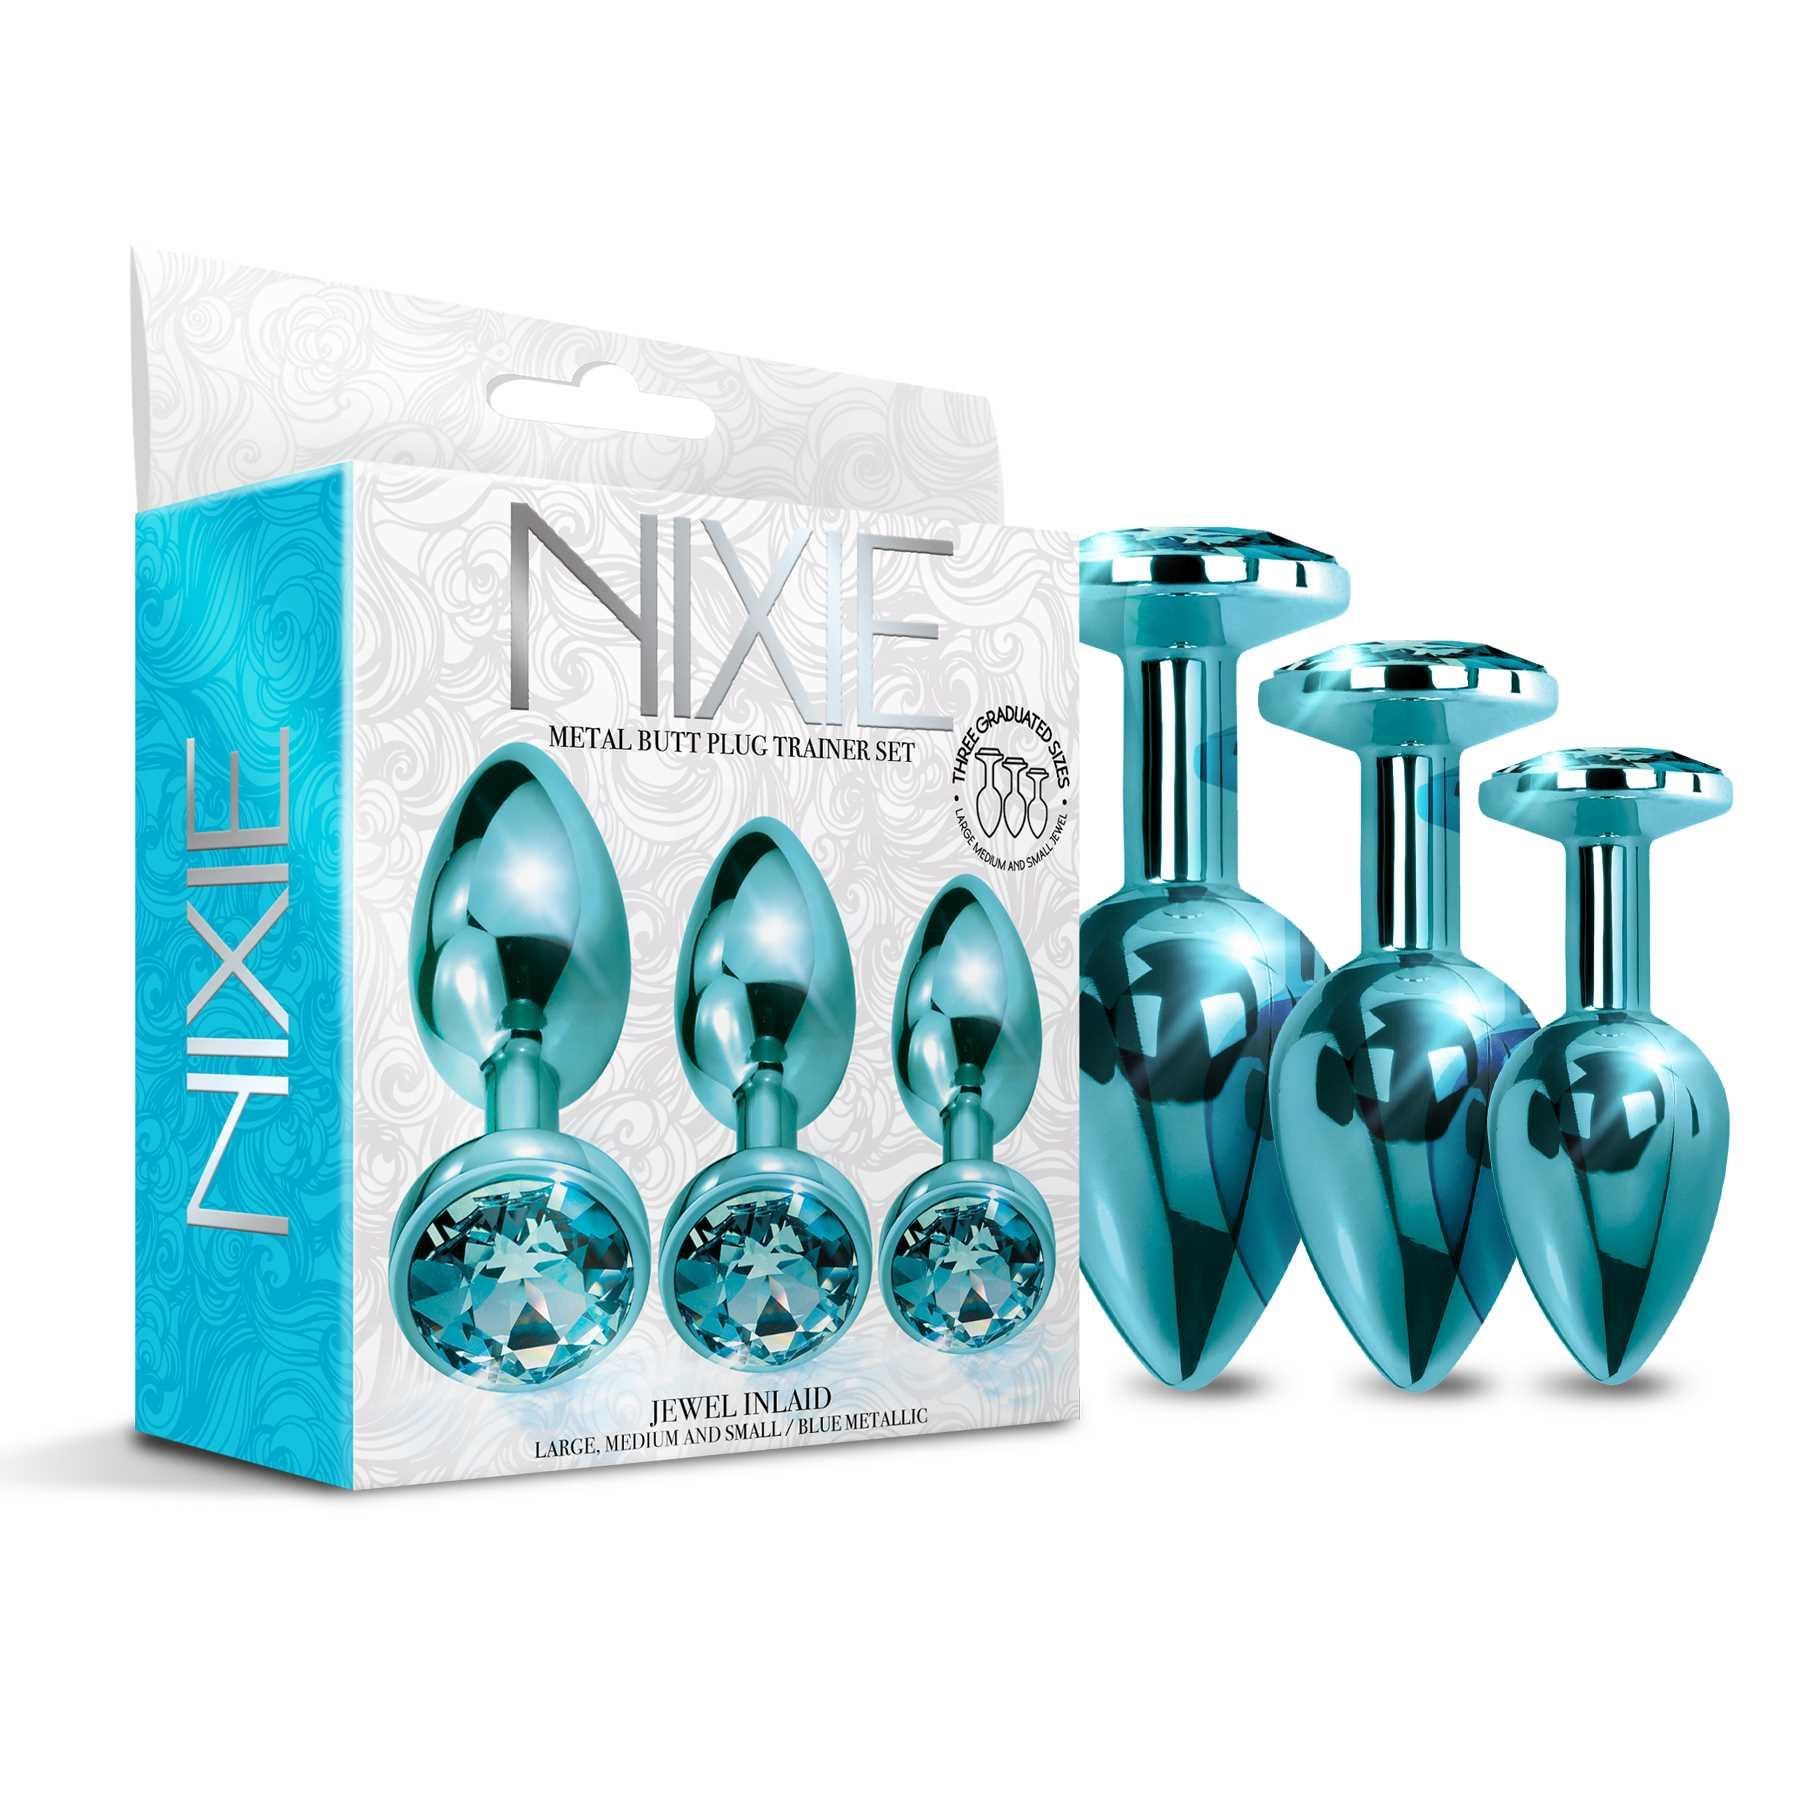 NIXIE Metal Butt Plug Trainer Set Metallic blue with box